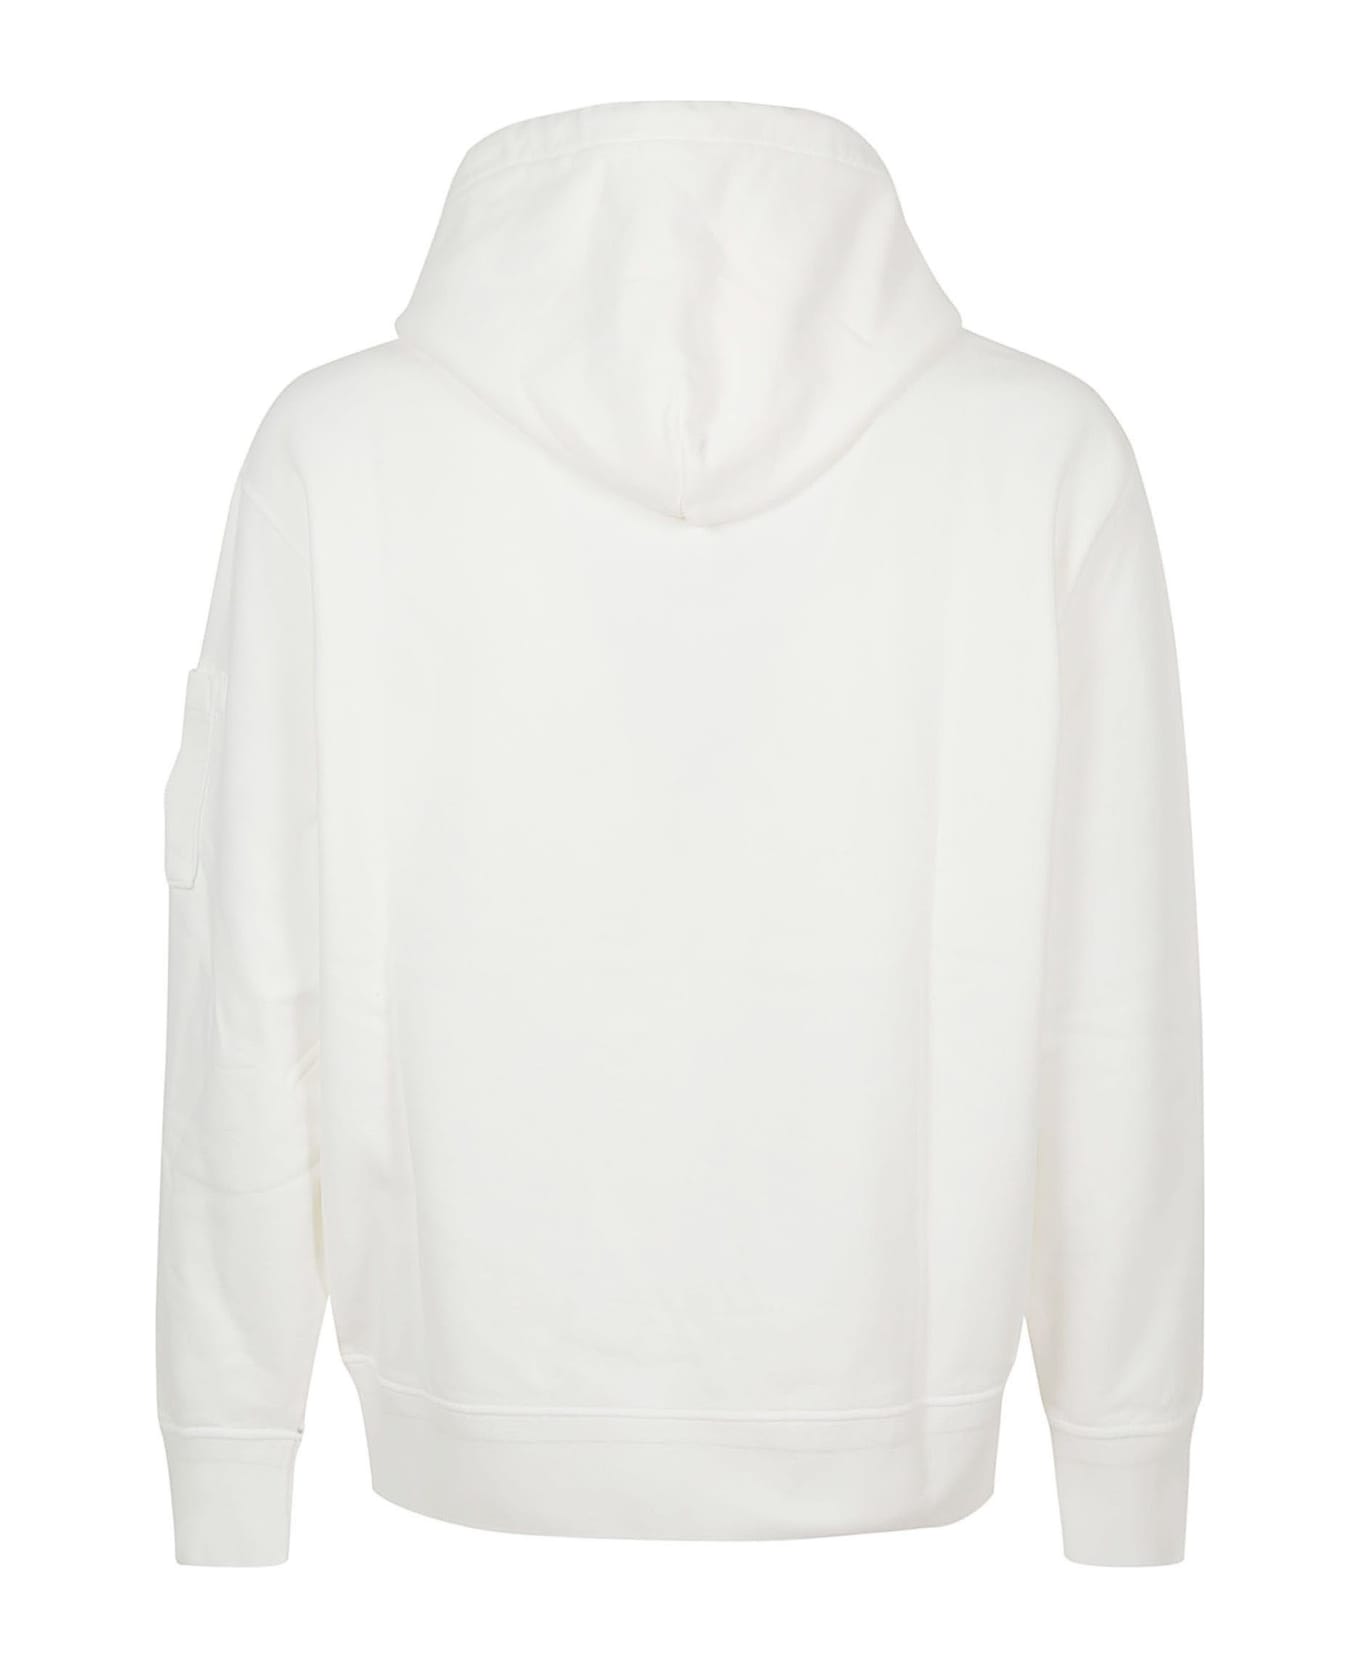 C.P. Company C.p.company Sweaters White - White